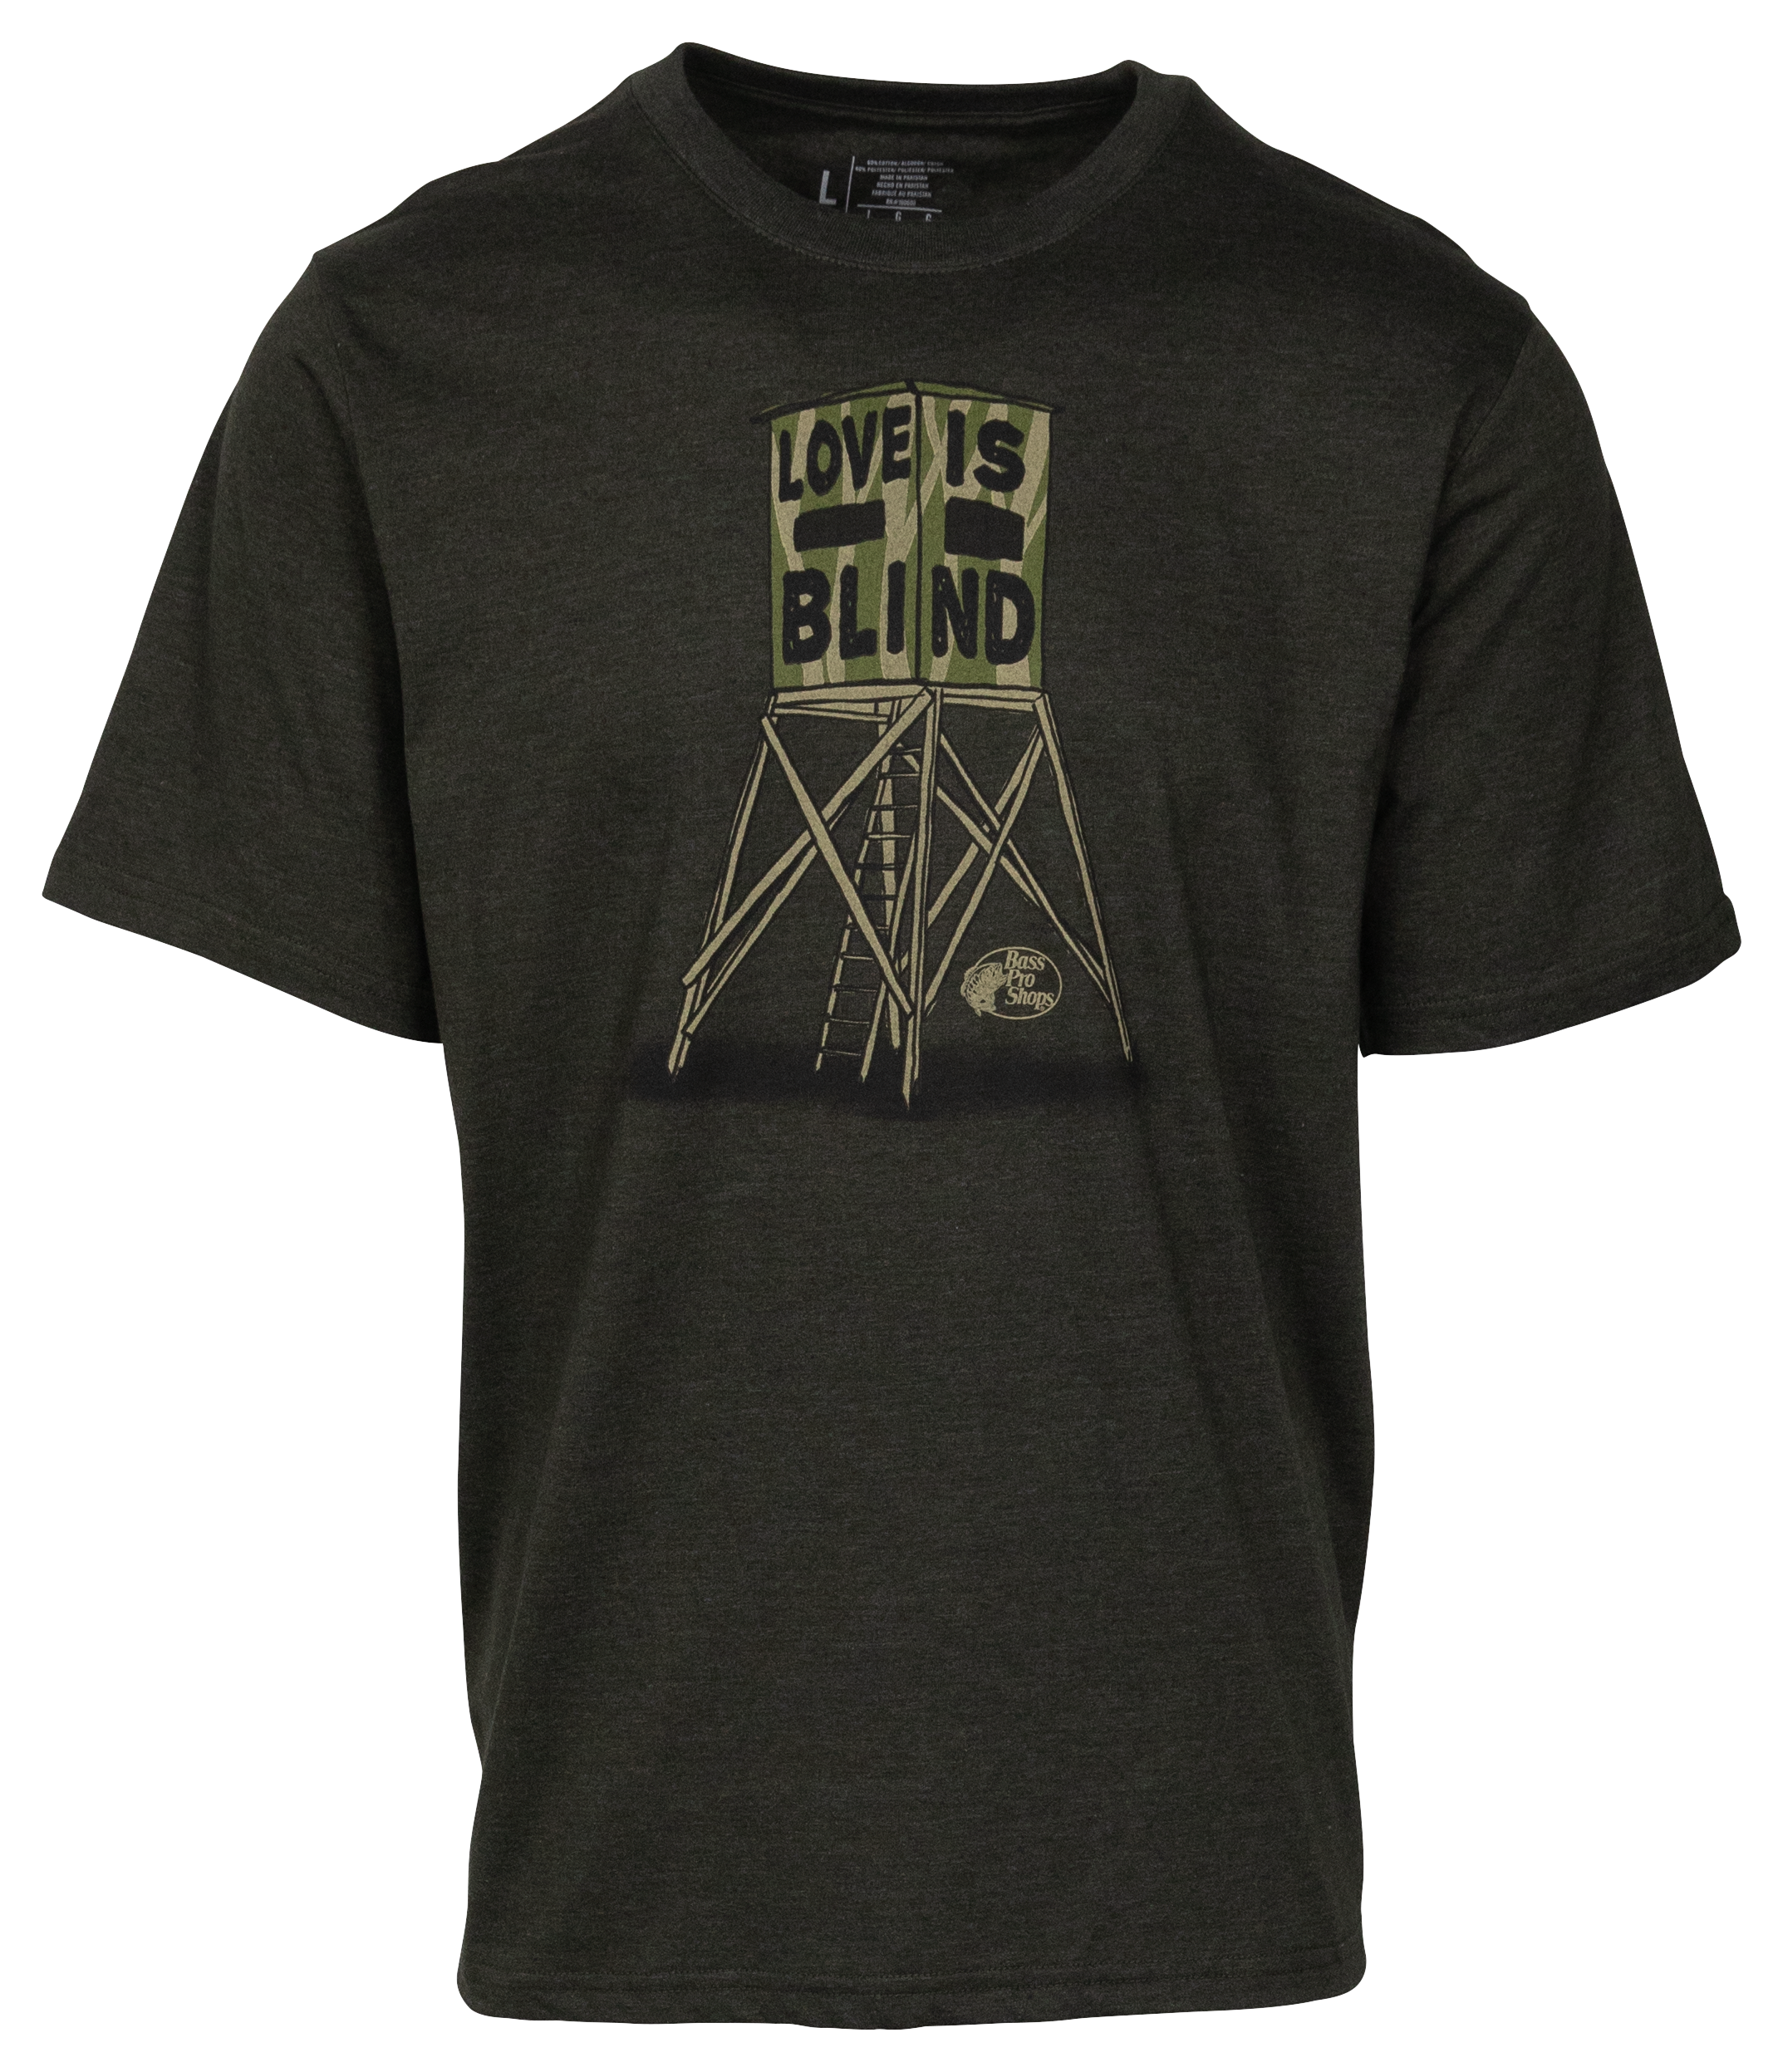 Bass Pro Shops Love Is Blind Short-Sleeve T-Shirt for Men - Olive Heather - 4XL